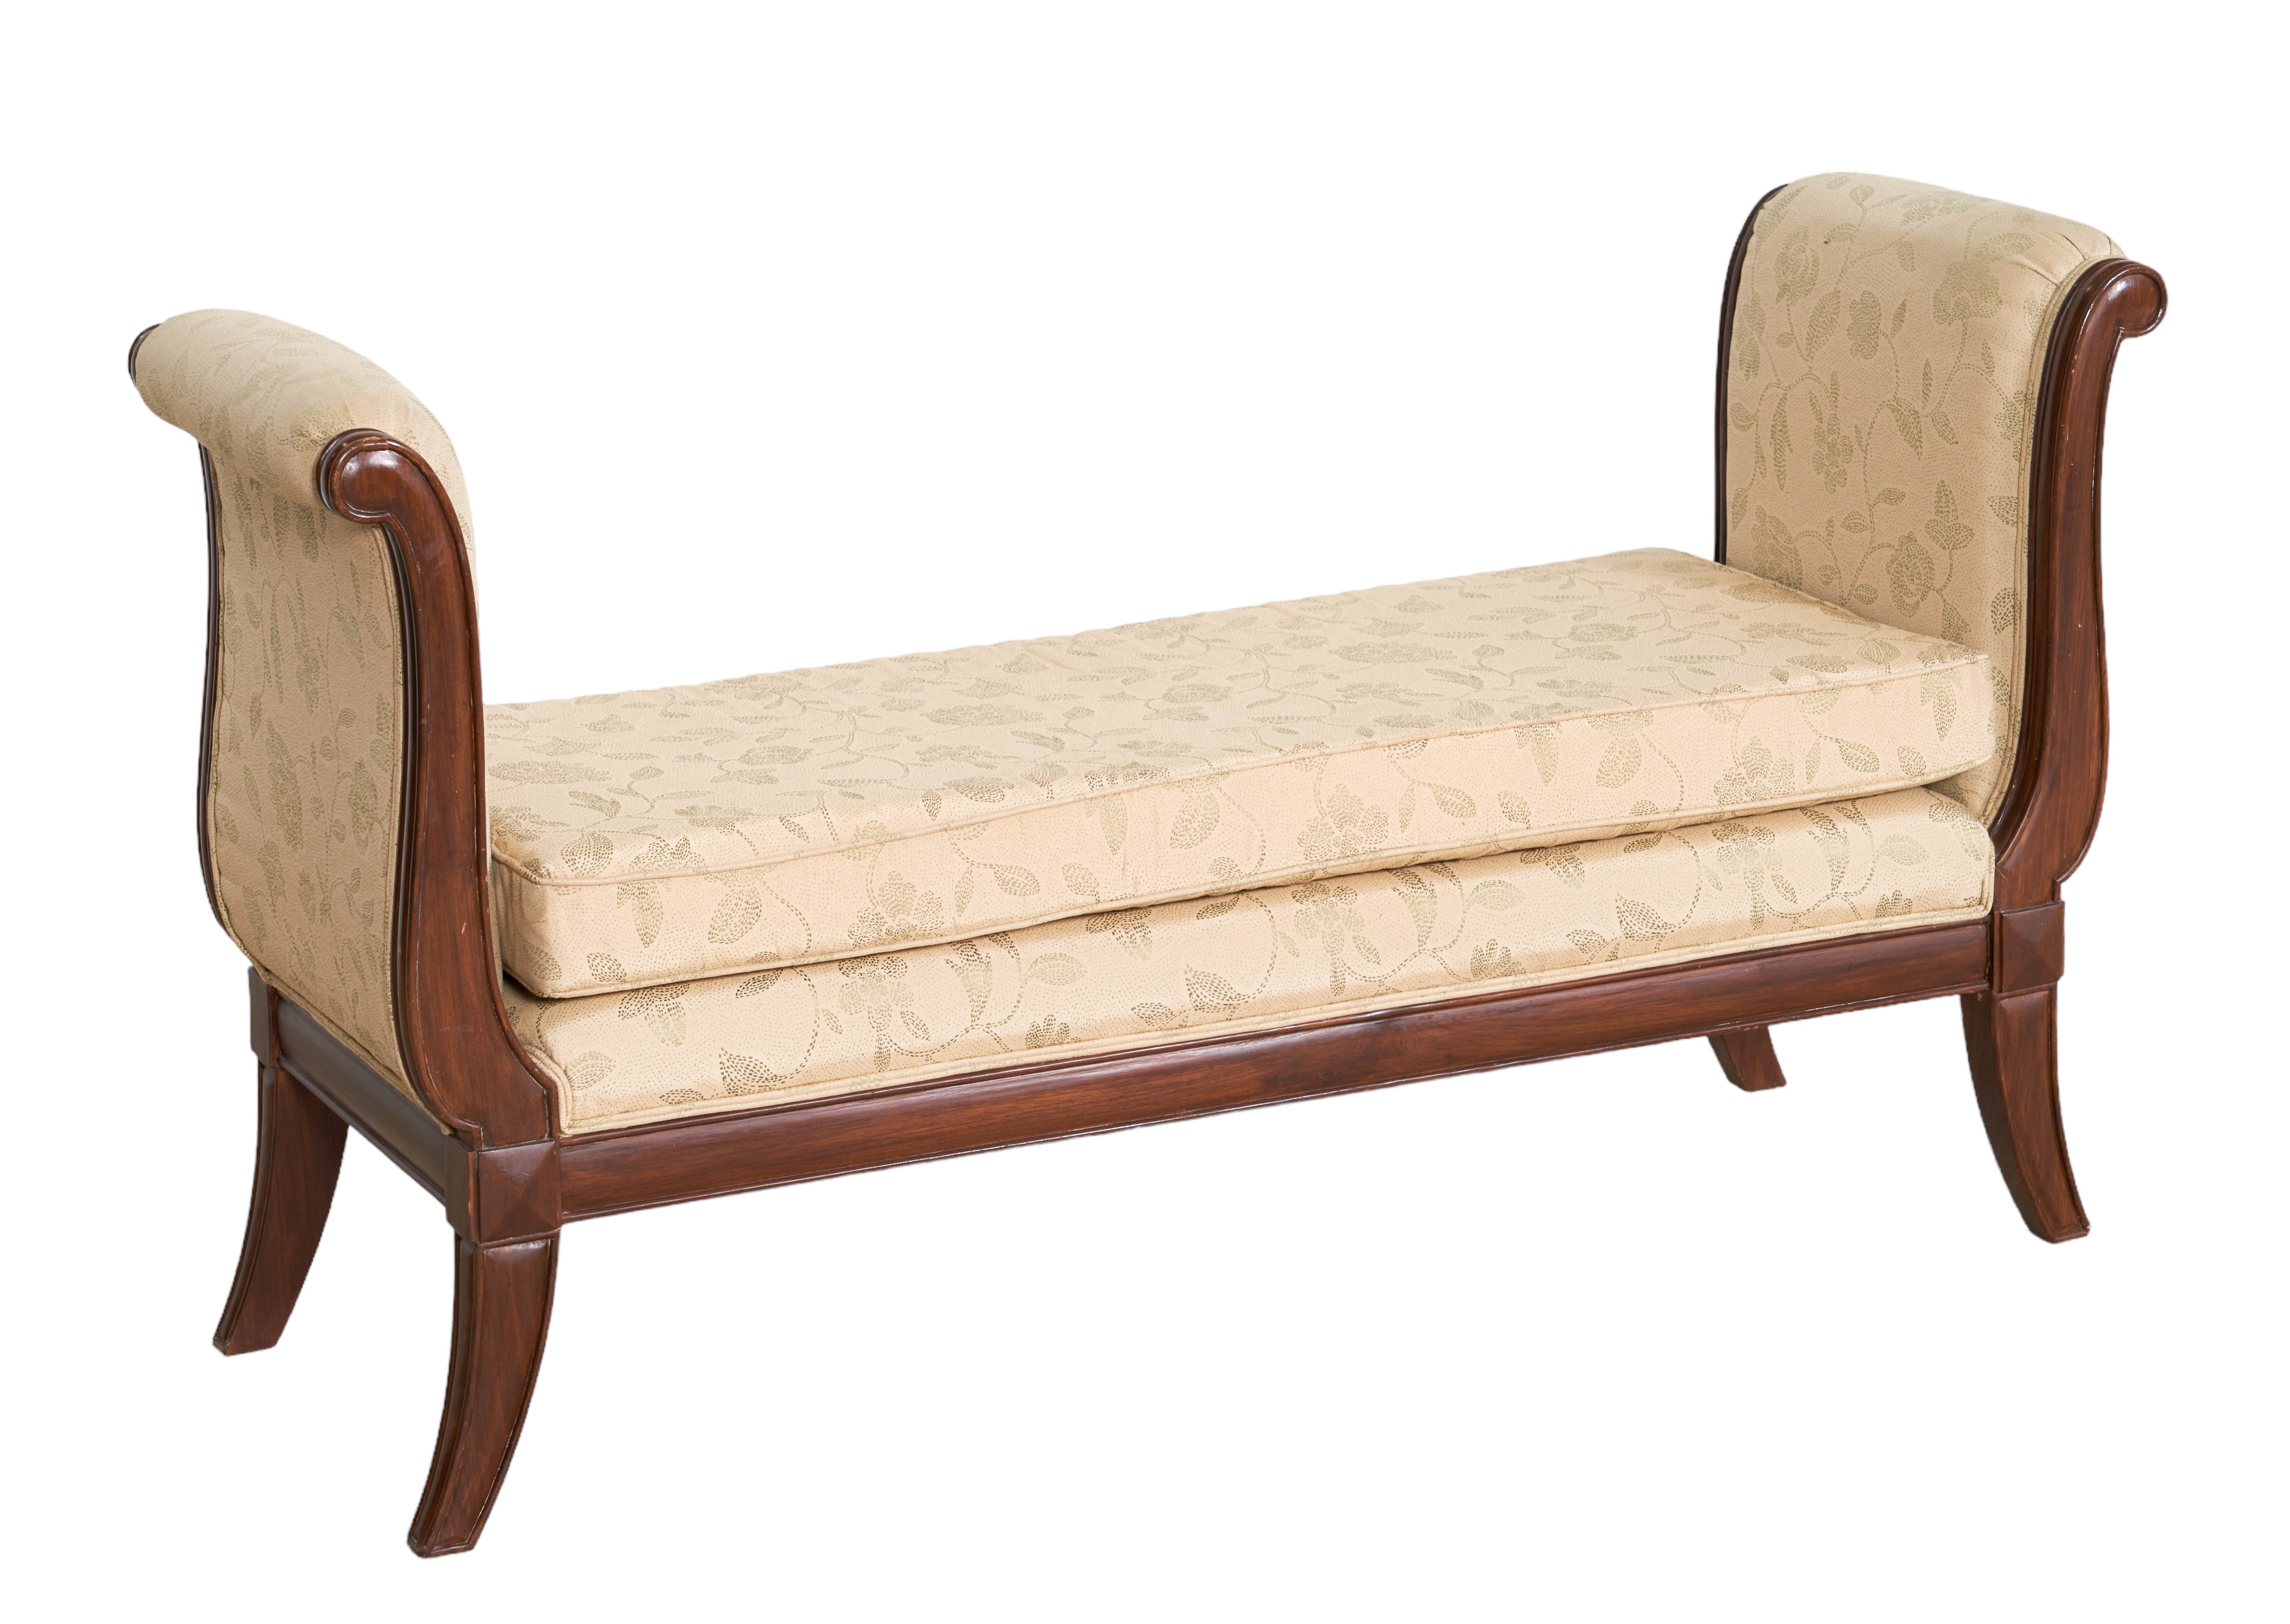 Regency style mahogany upholstered 3c66c9